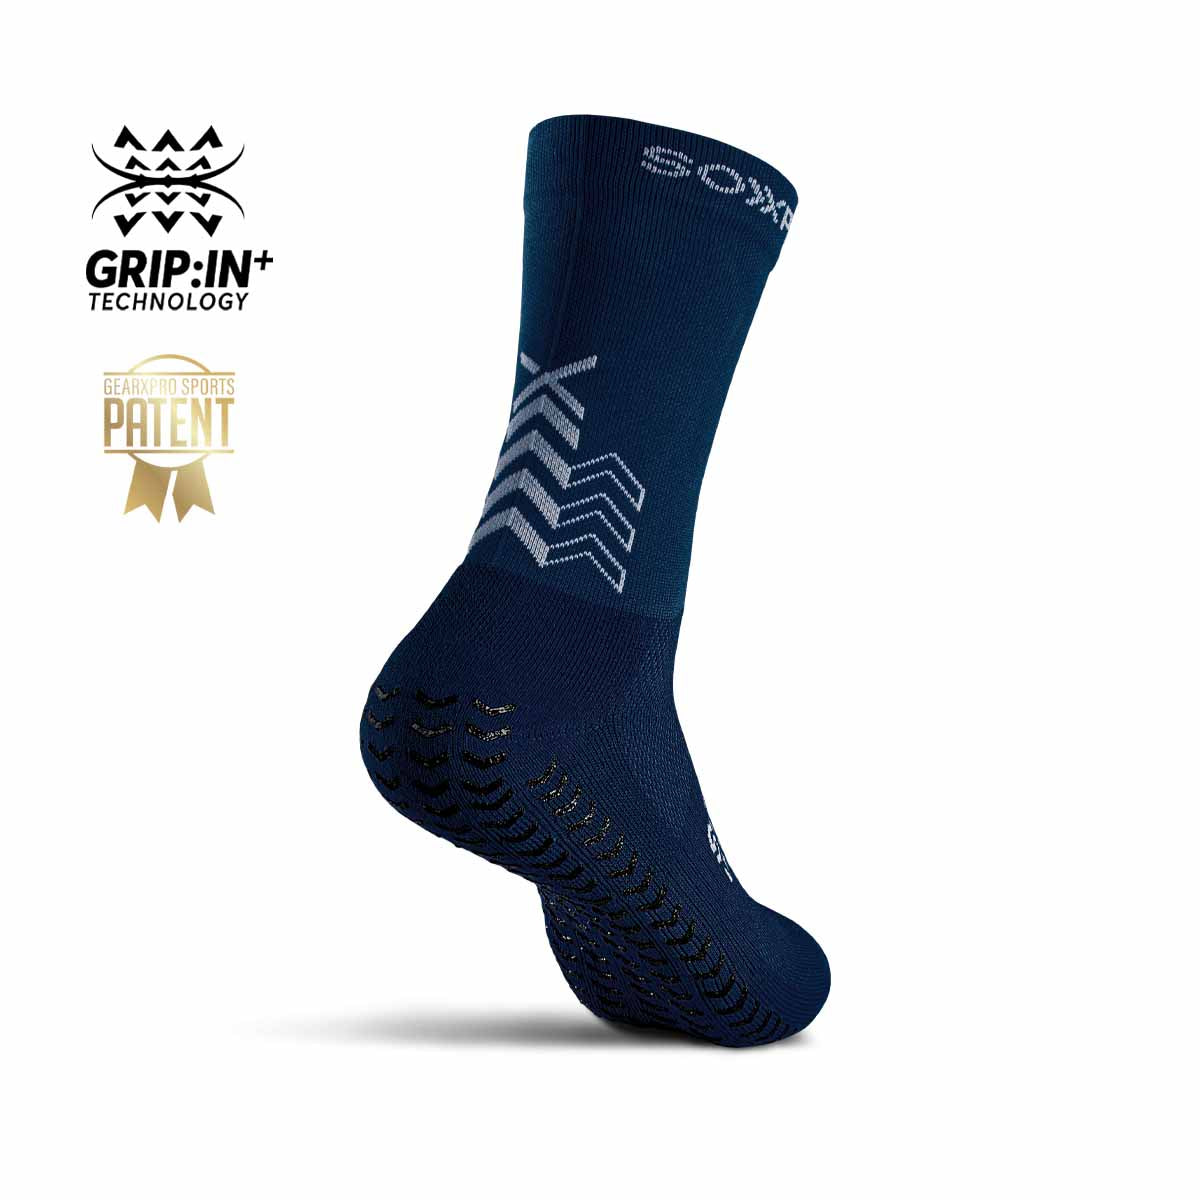 Soxpro Classic Grip Socks Black